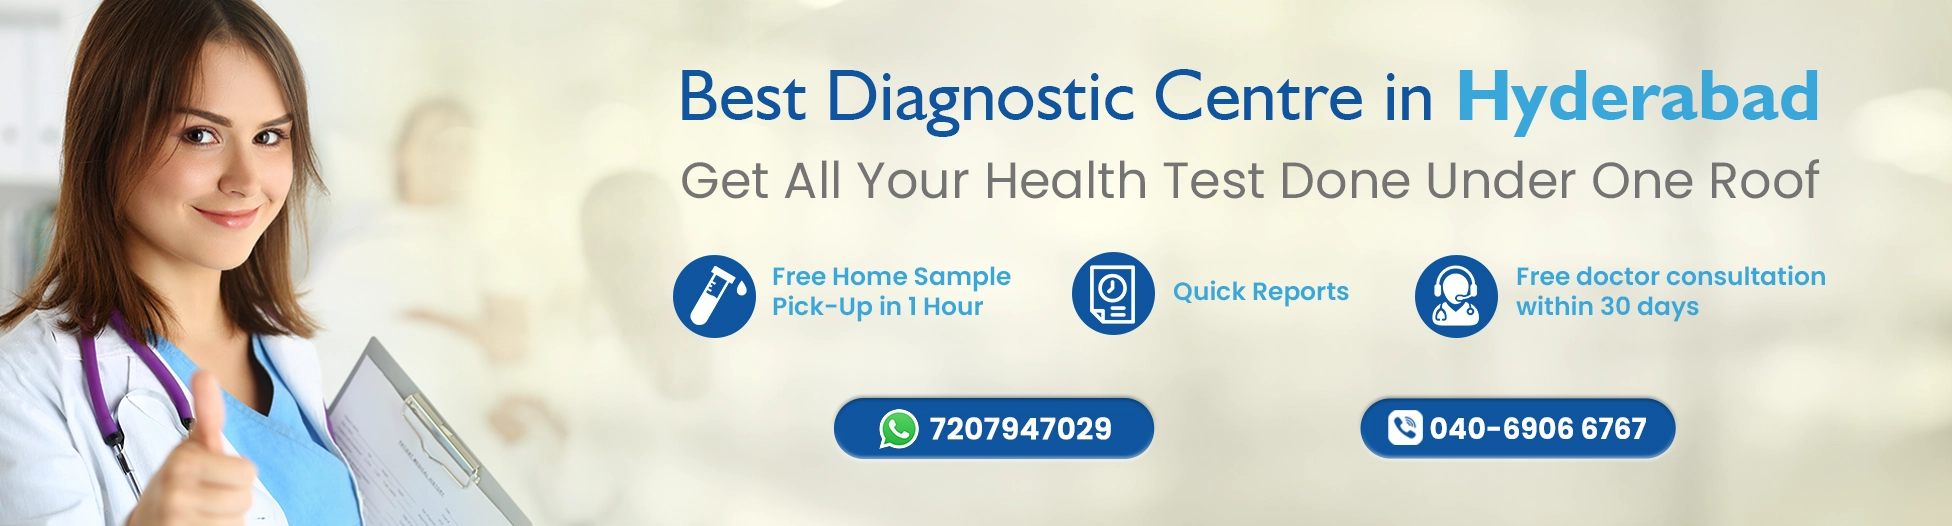 Best diagnostic center in Hyderabad